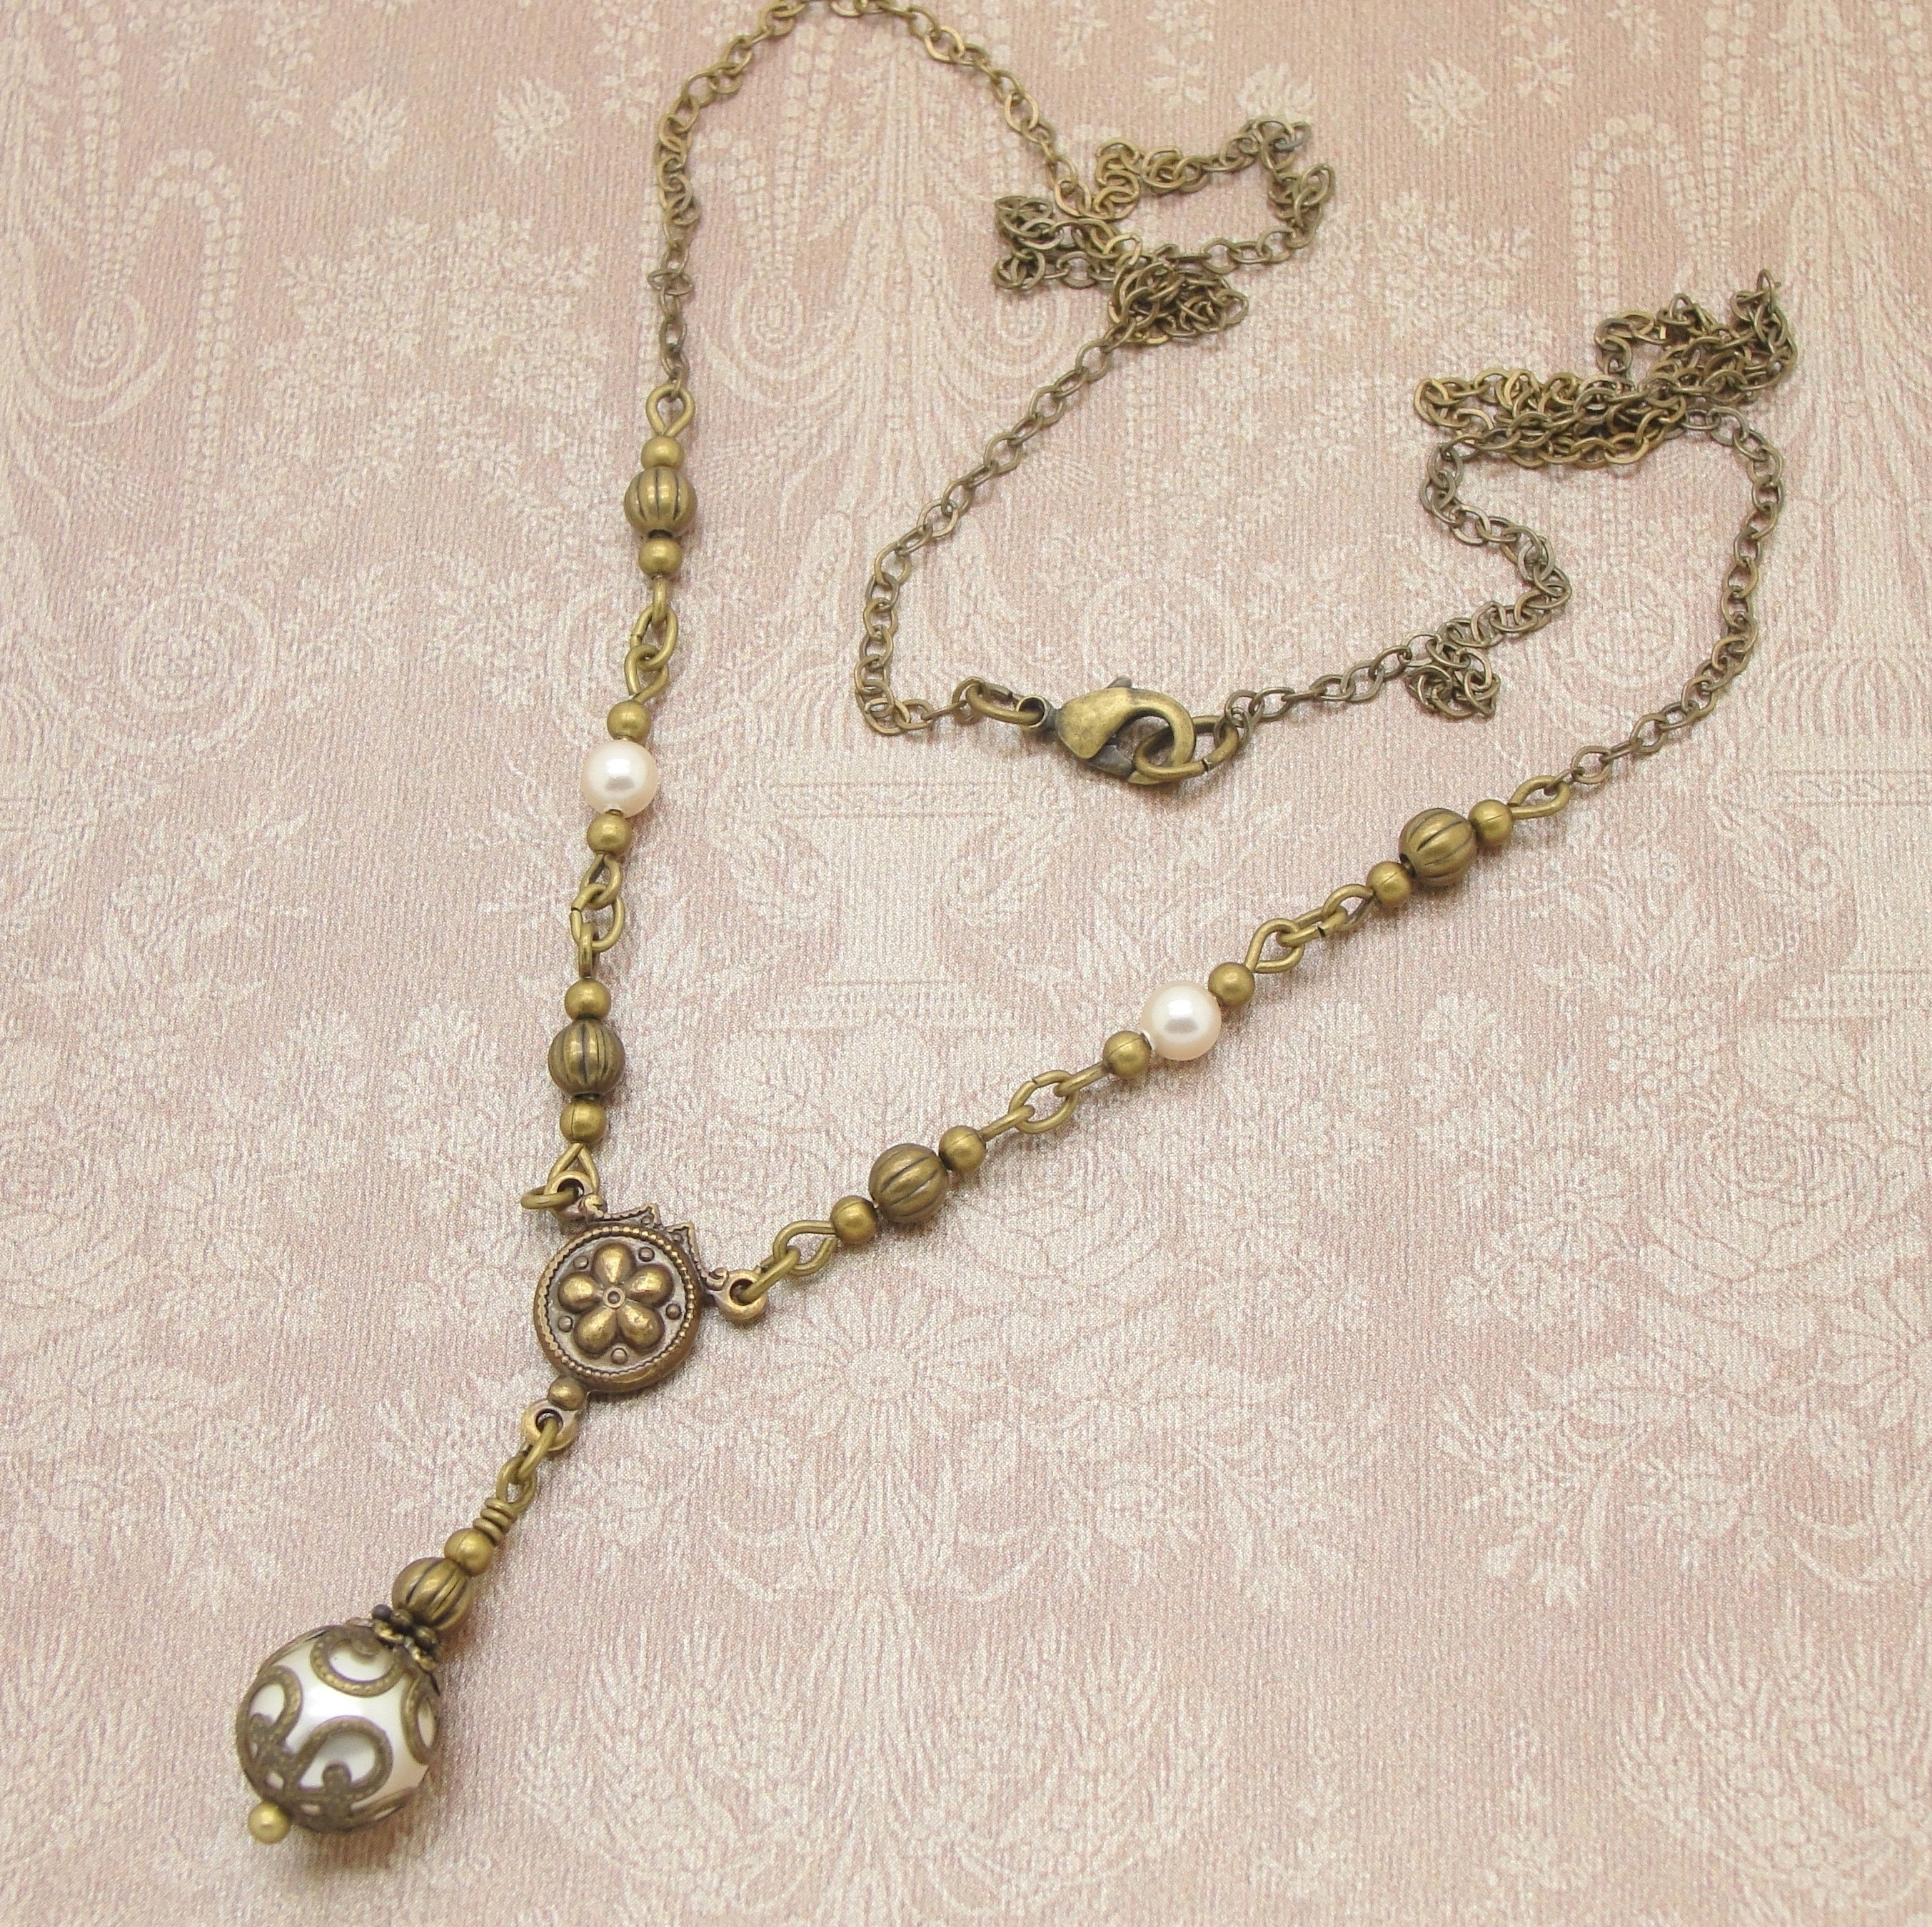 Victorian Necklace in Cream Swarovski Pearls in the Art | Etsy